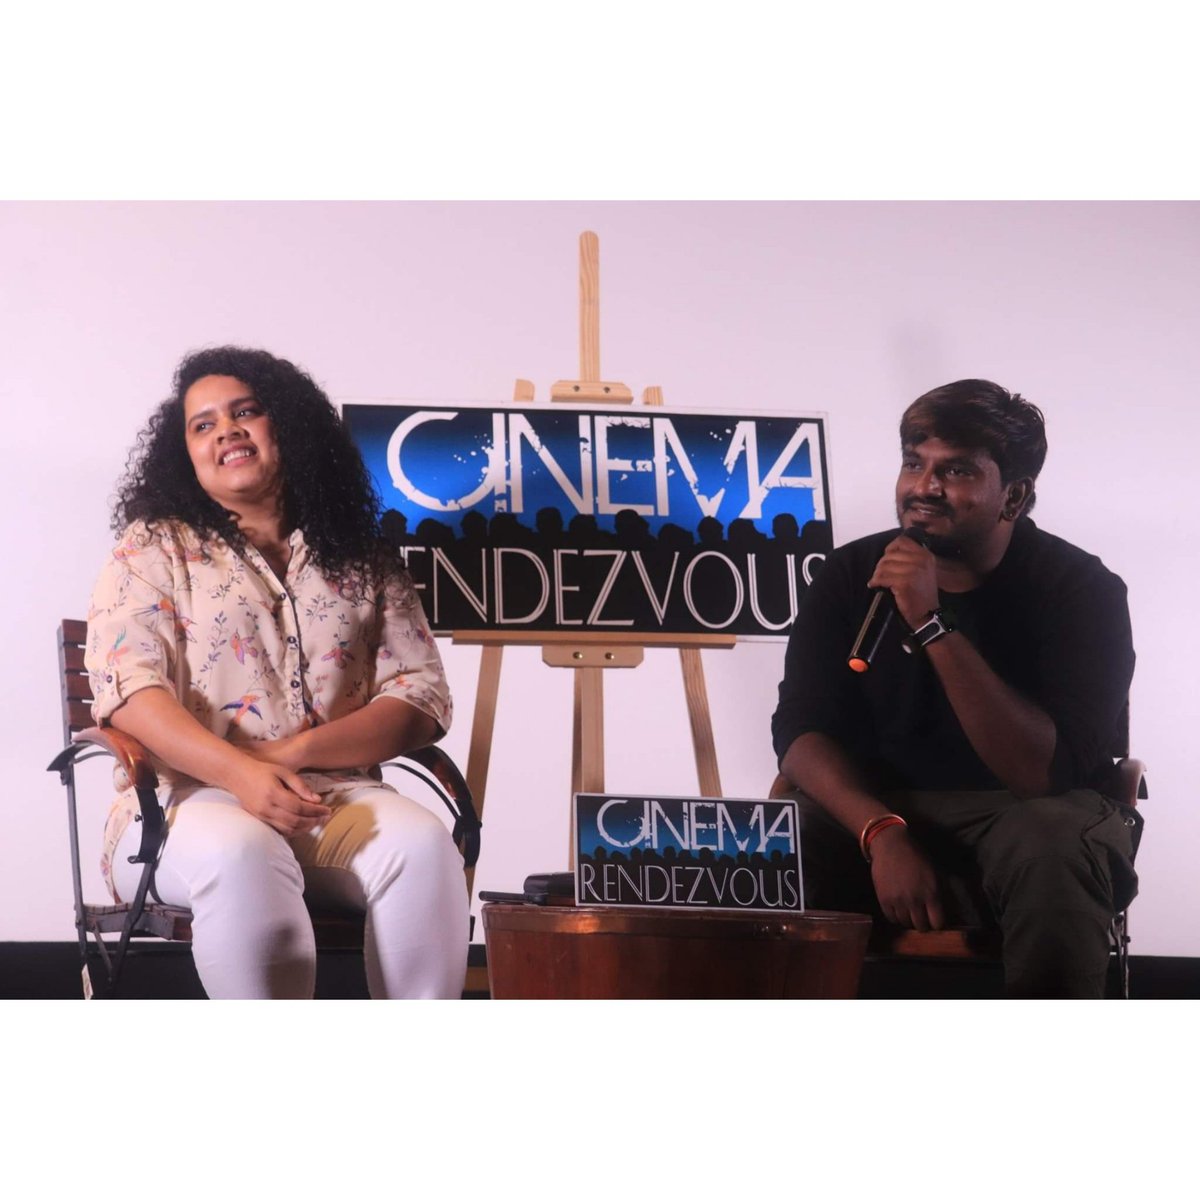 CR89 | #OhMyKadavule | #AshwathMarimuthu

Full album link :

m.facebook.com/story.php?stor…
.
.
.
.
.

#FilmClub #ChennaiFilmClub #MadrasFilmClub #Cinephiles #Cinema #CineMagazine #FilmBuff #FilmCommunity #MovieBuff